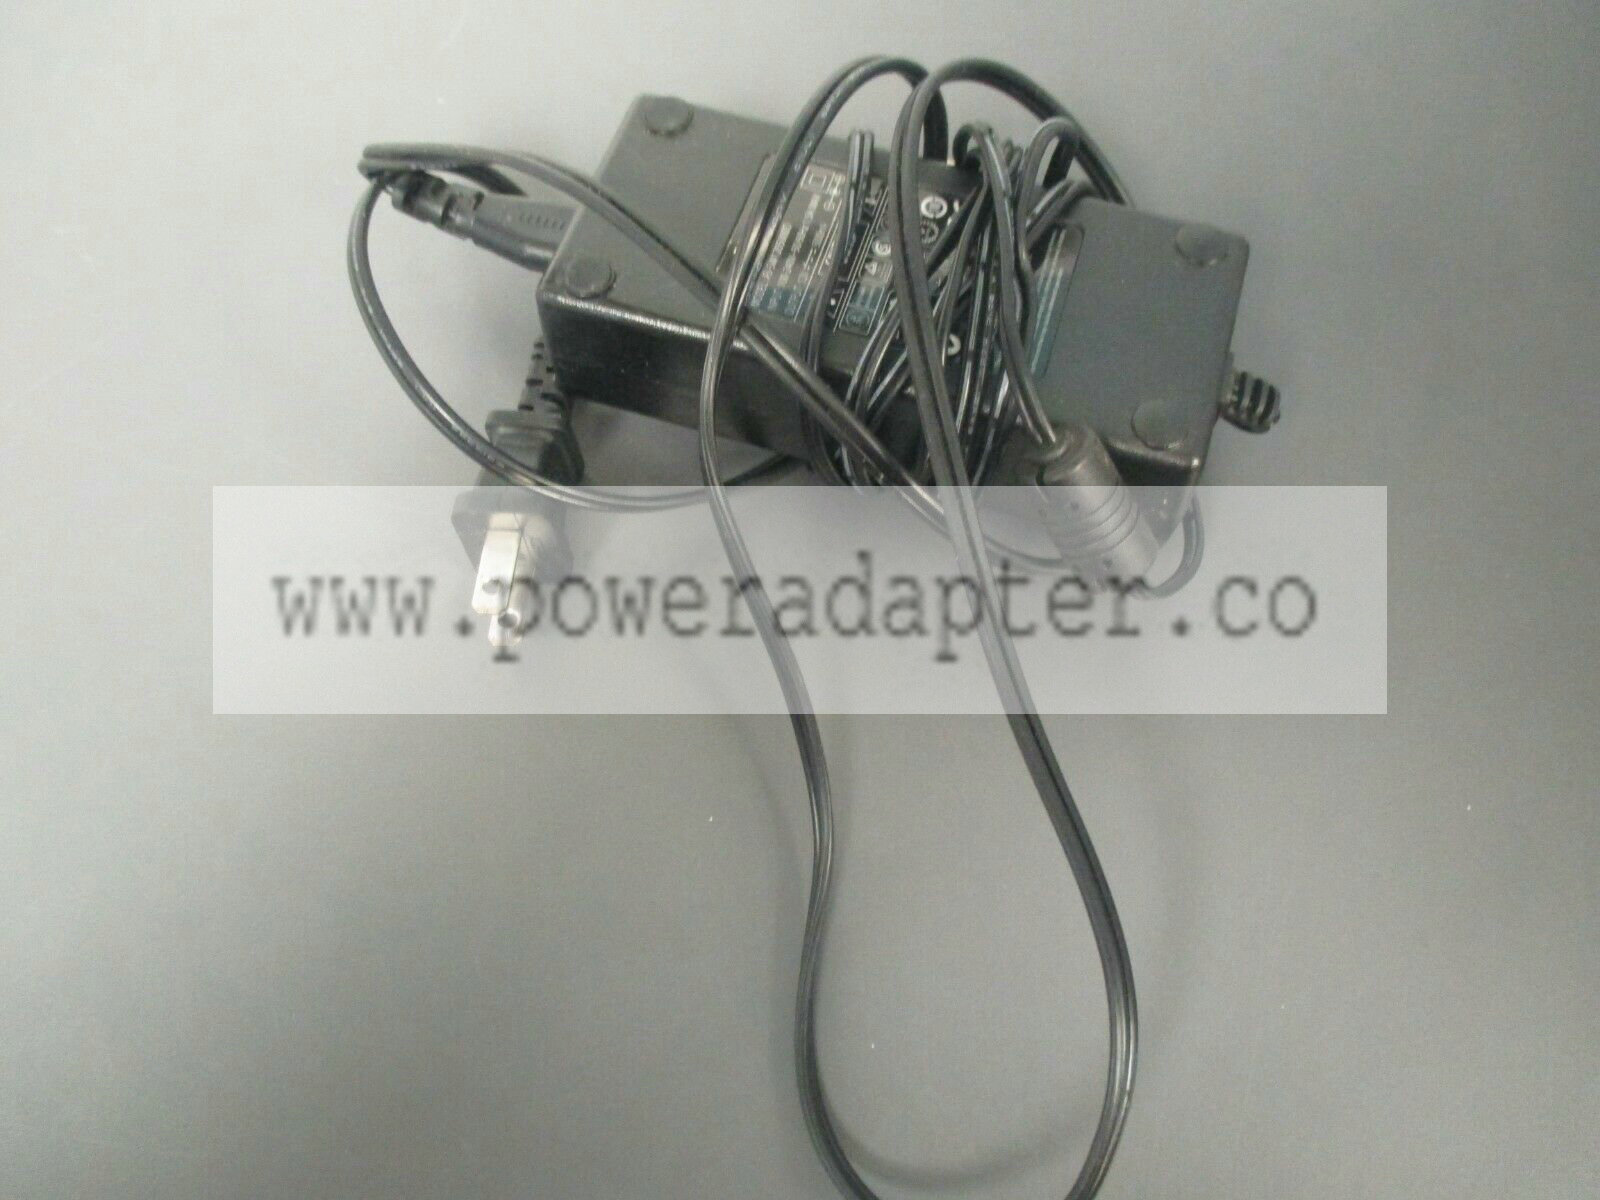 Power Adapter FJ-SW1205000D model:FJ-SW1205000D input:100-240v 50-60hz output:12v 5000ma Power Adapter FJ-SW1205000D